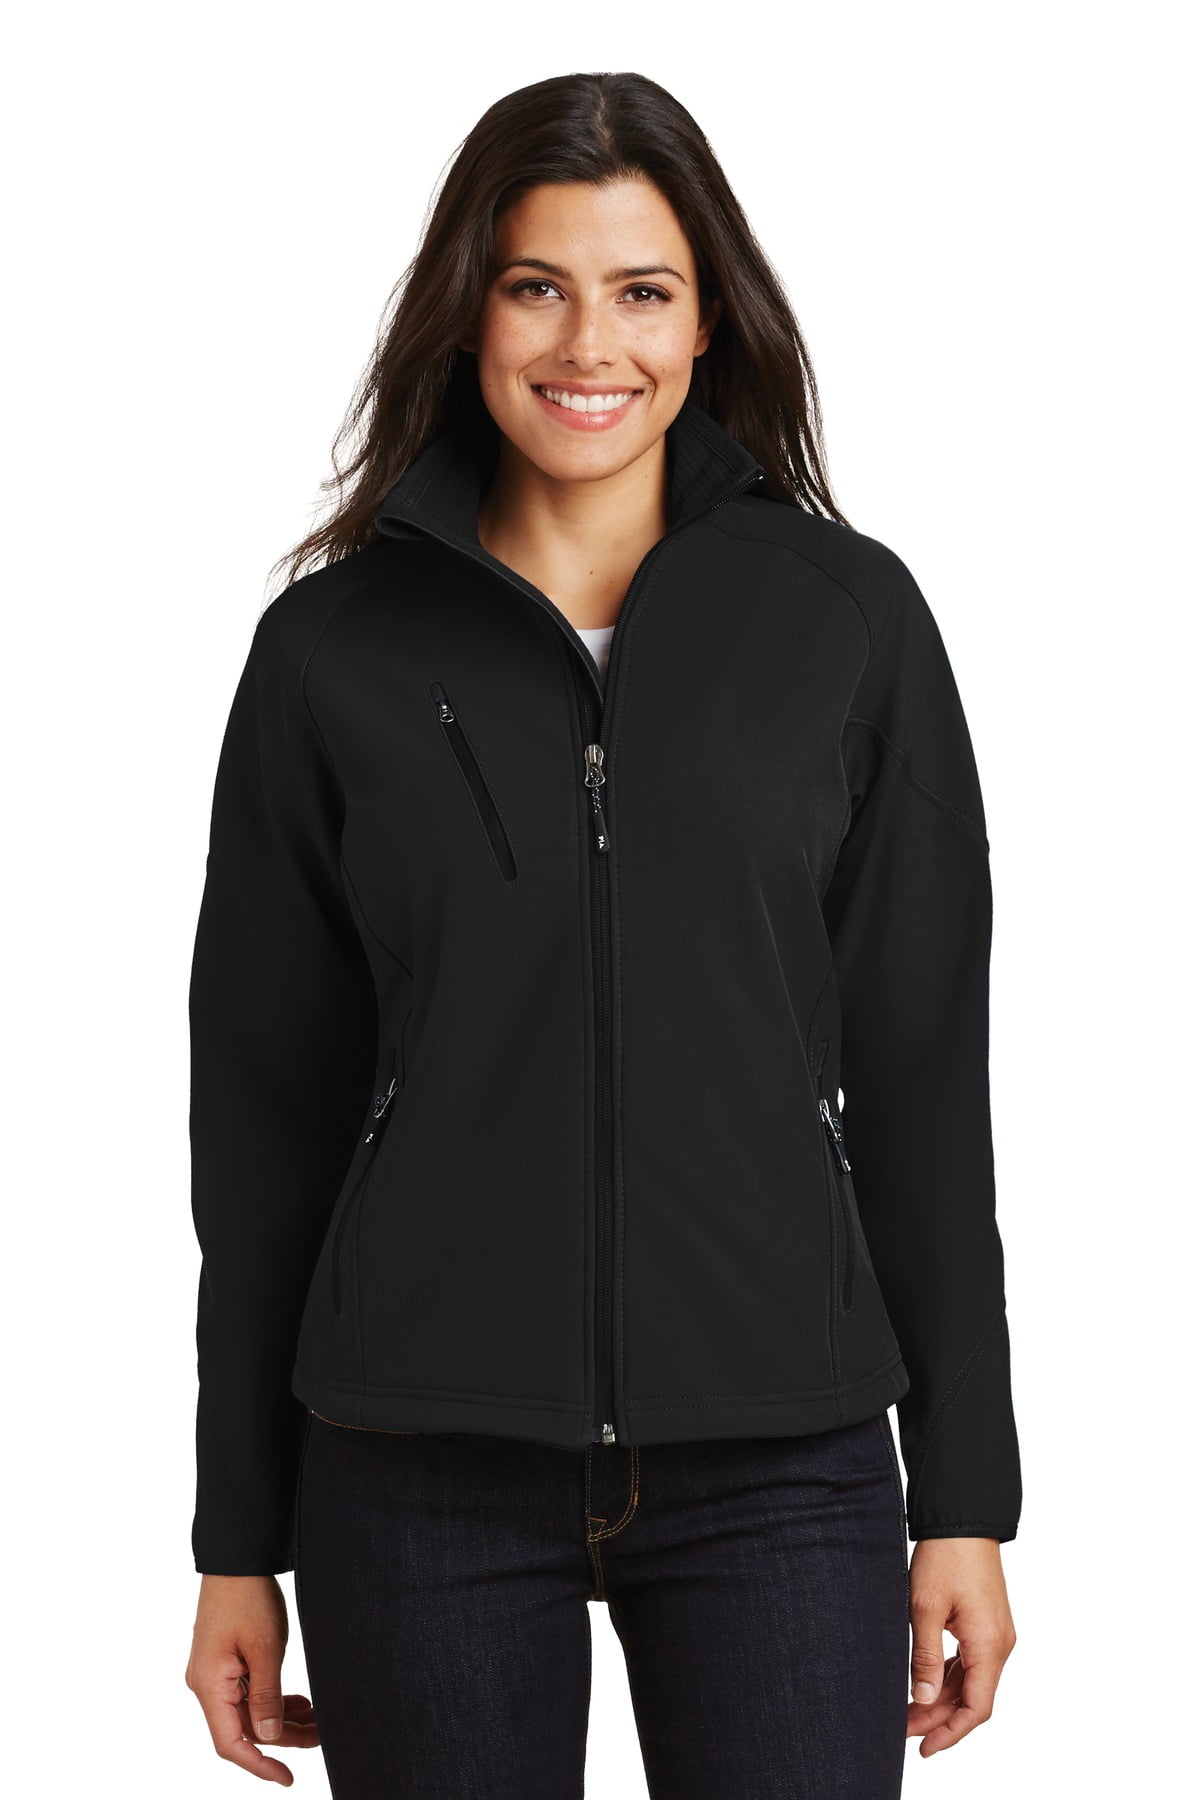 Port Authority Women's Textured Soft Shell Jacket - L705 - Walmart.com